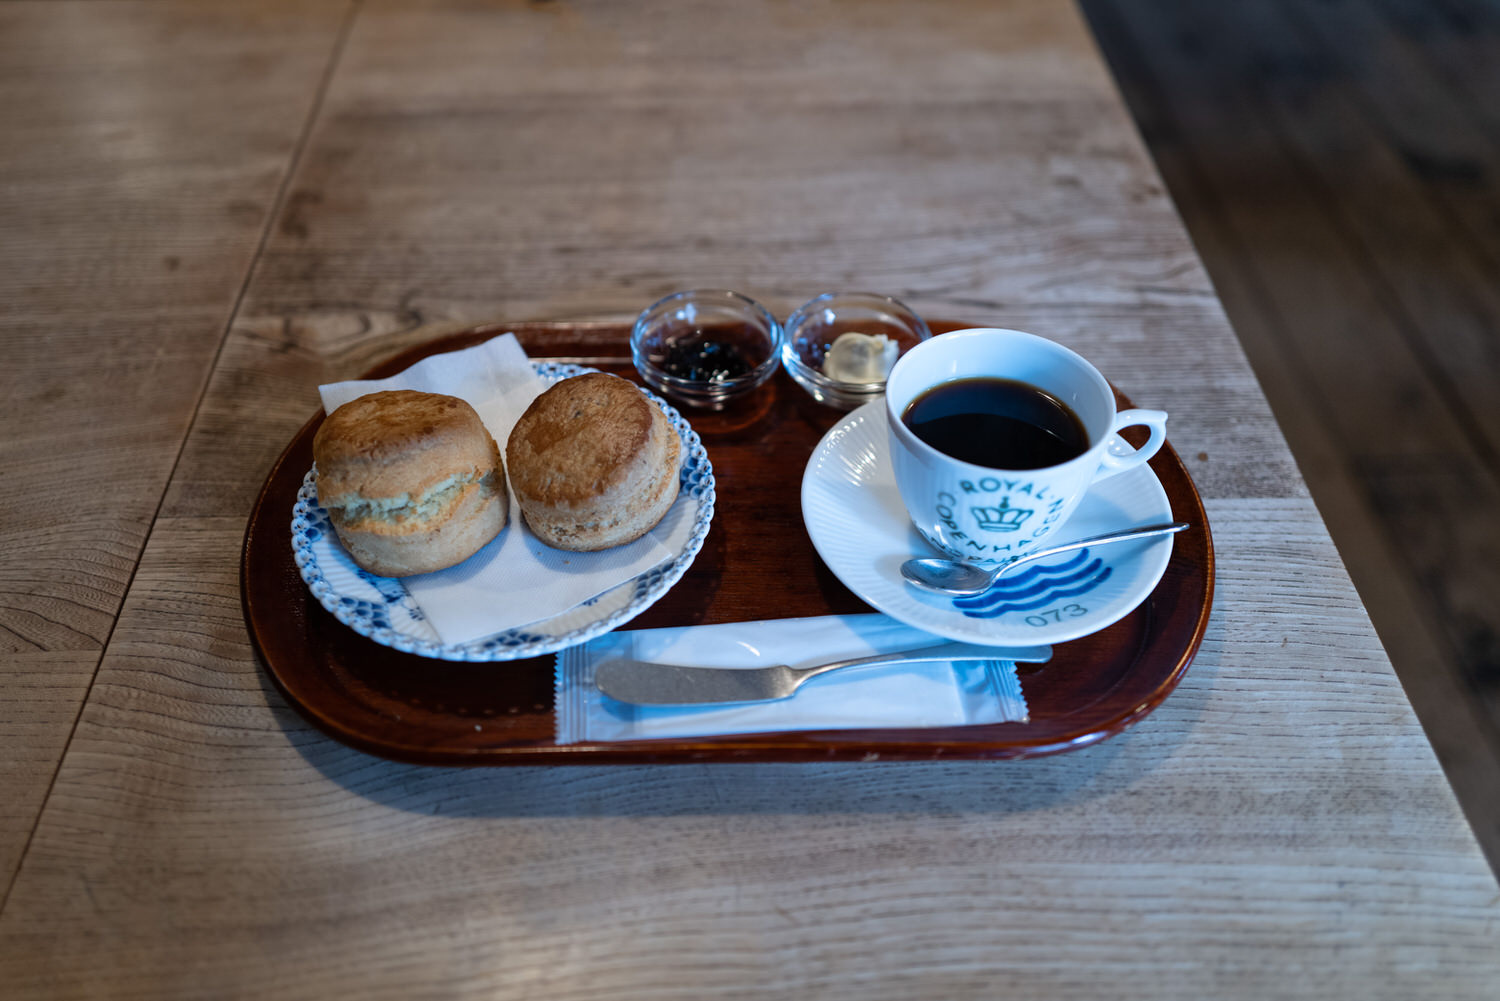 Hataya, scones and coffee